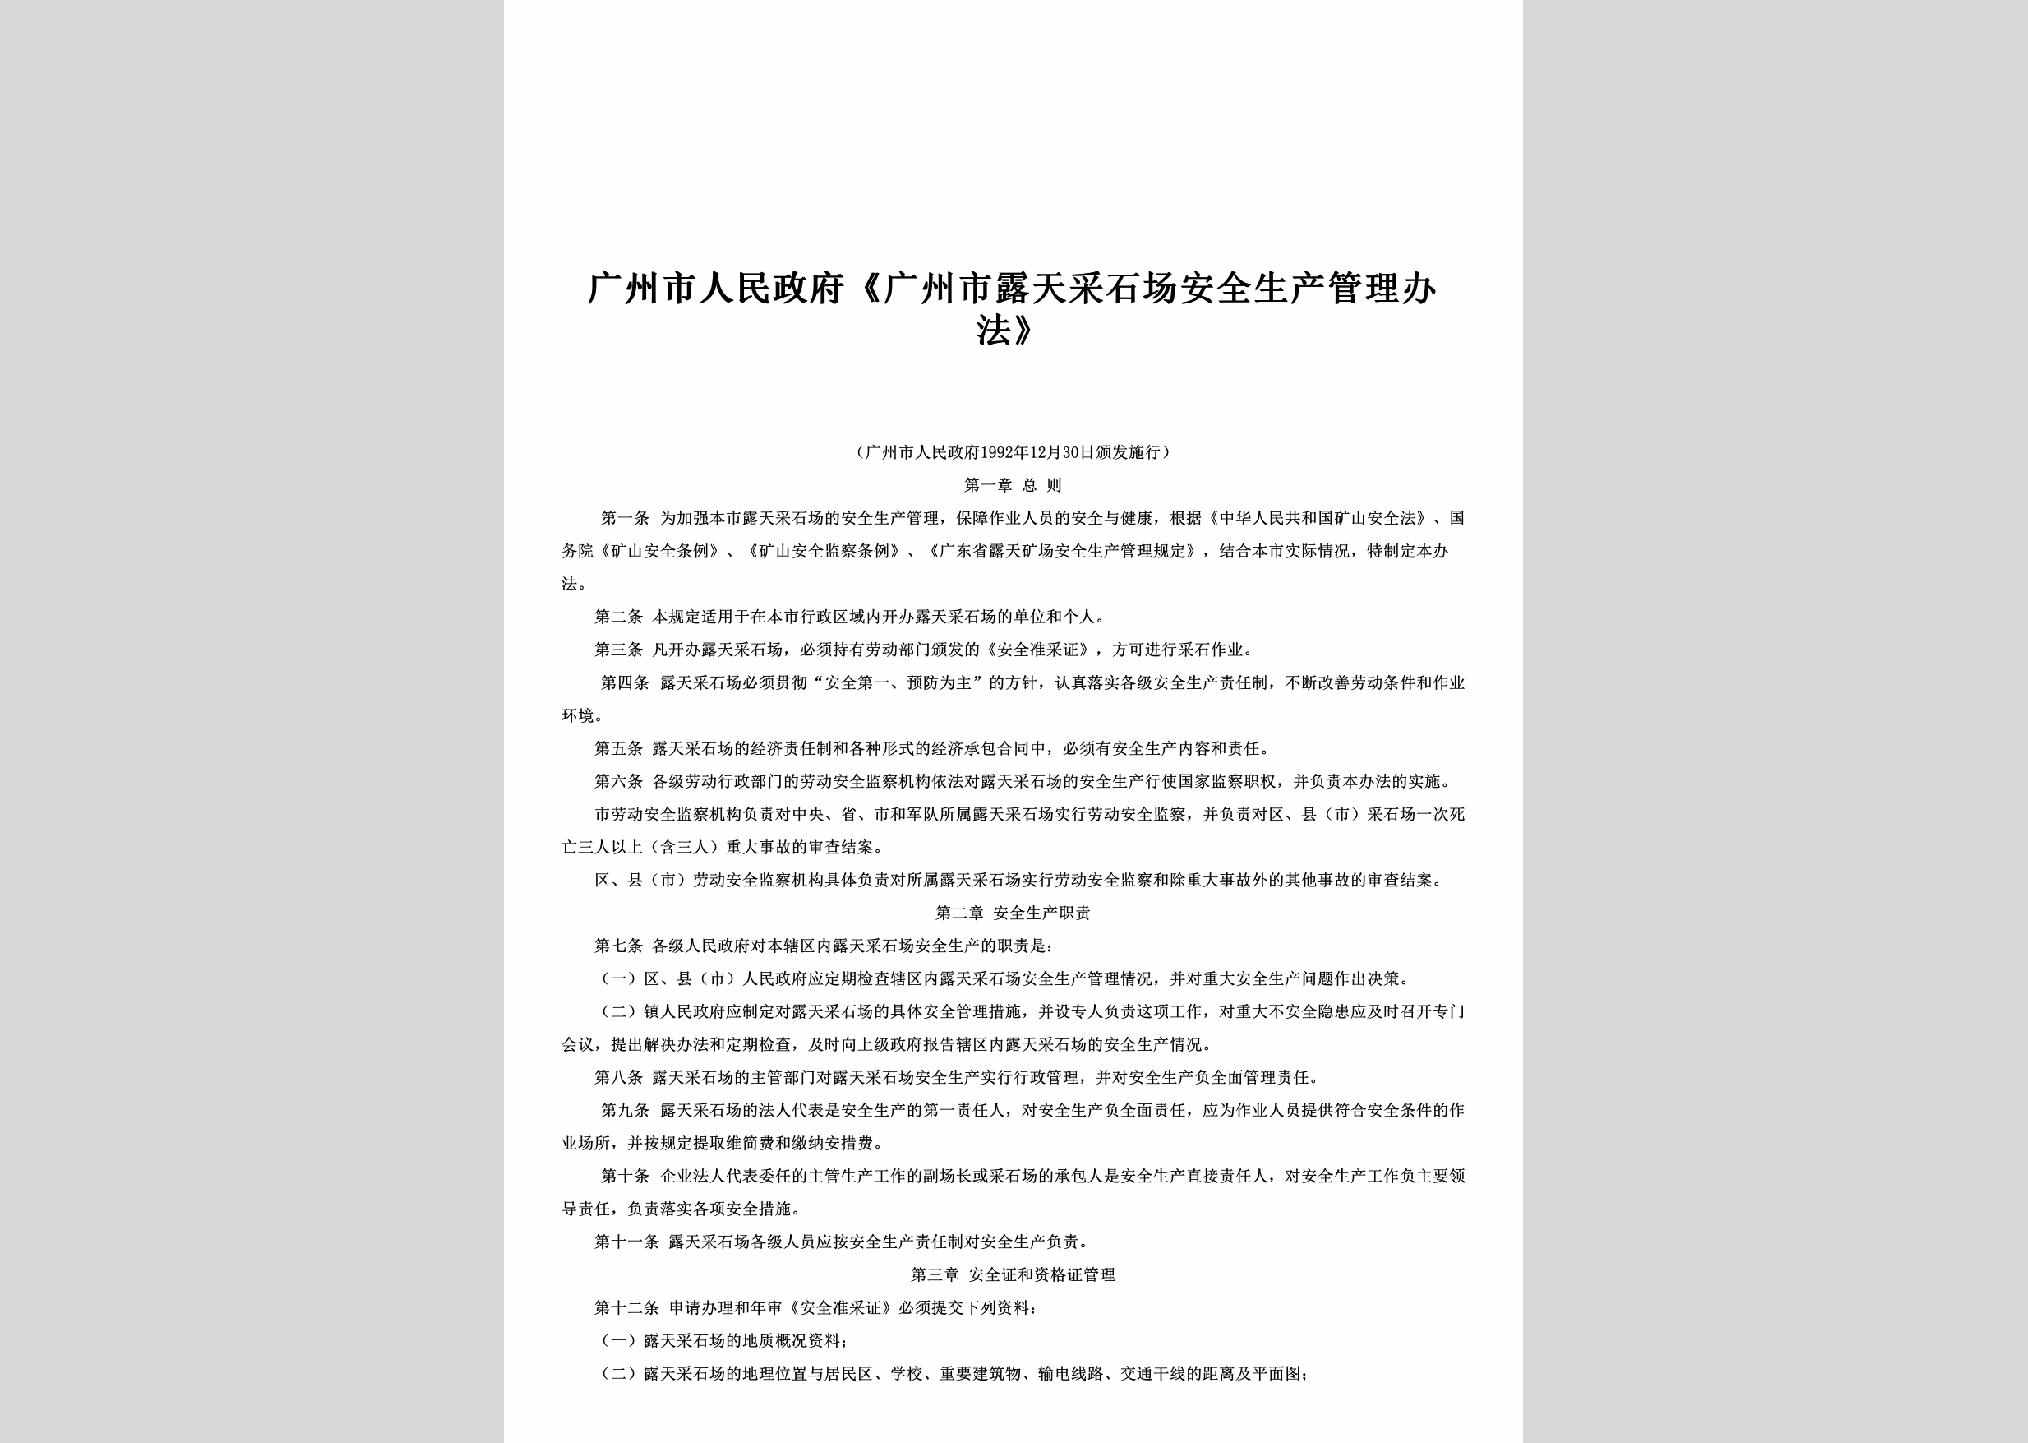 GD-CSCGLBF-1992：《广州市露天采石场安全生产管理办法》